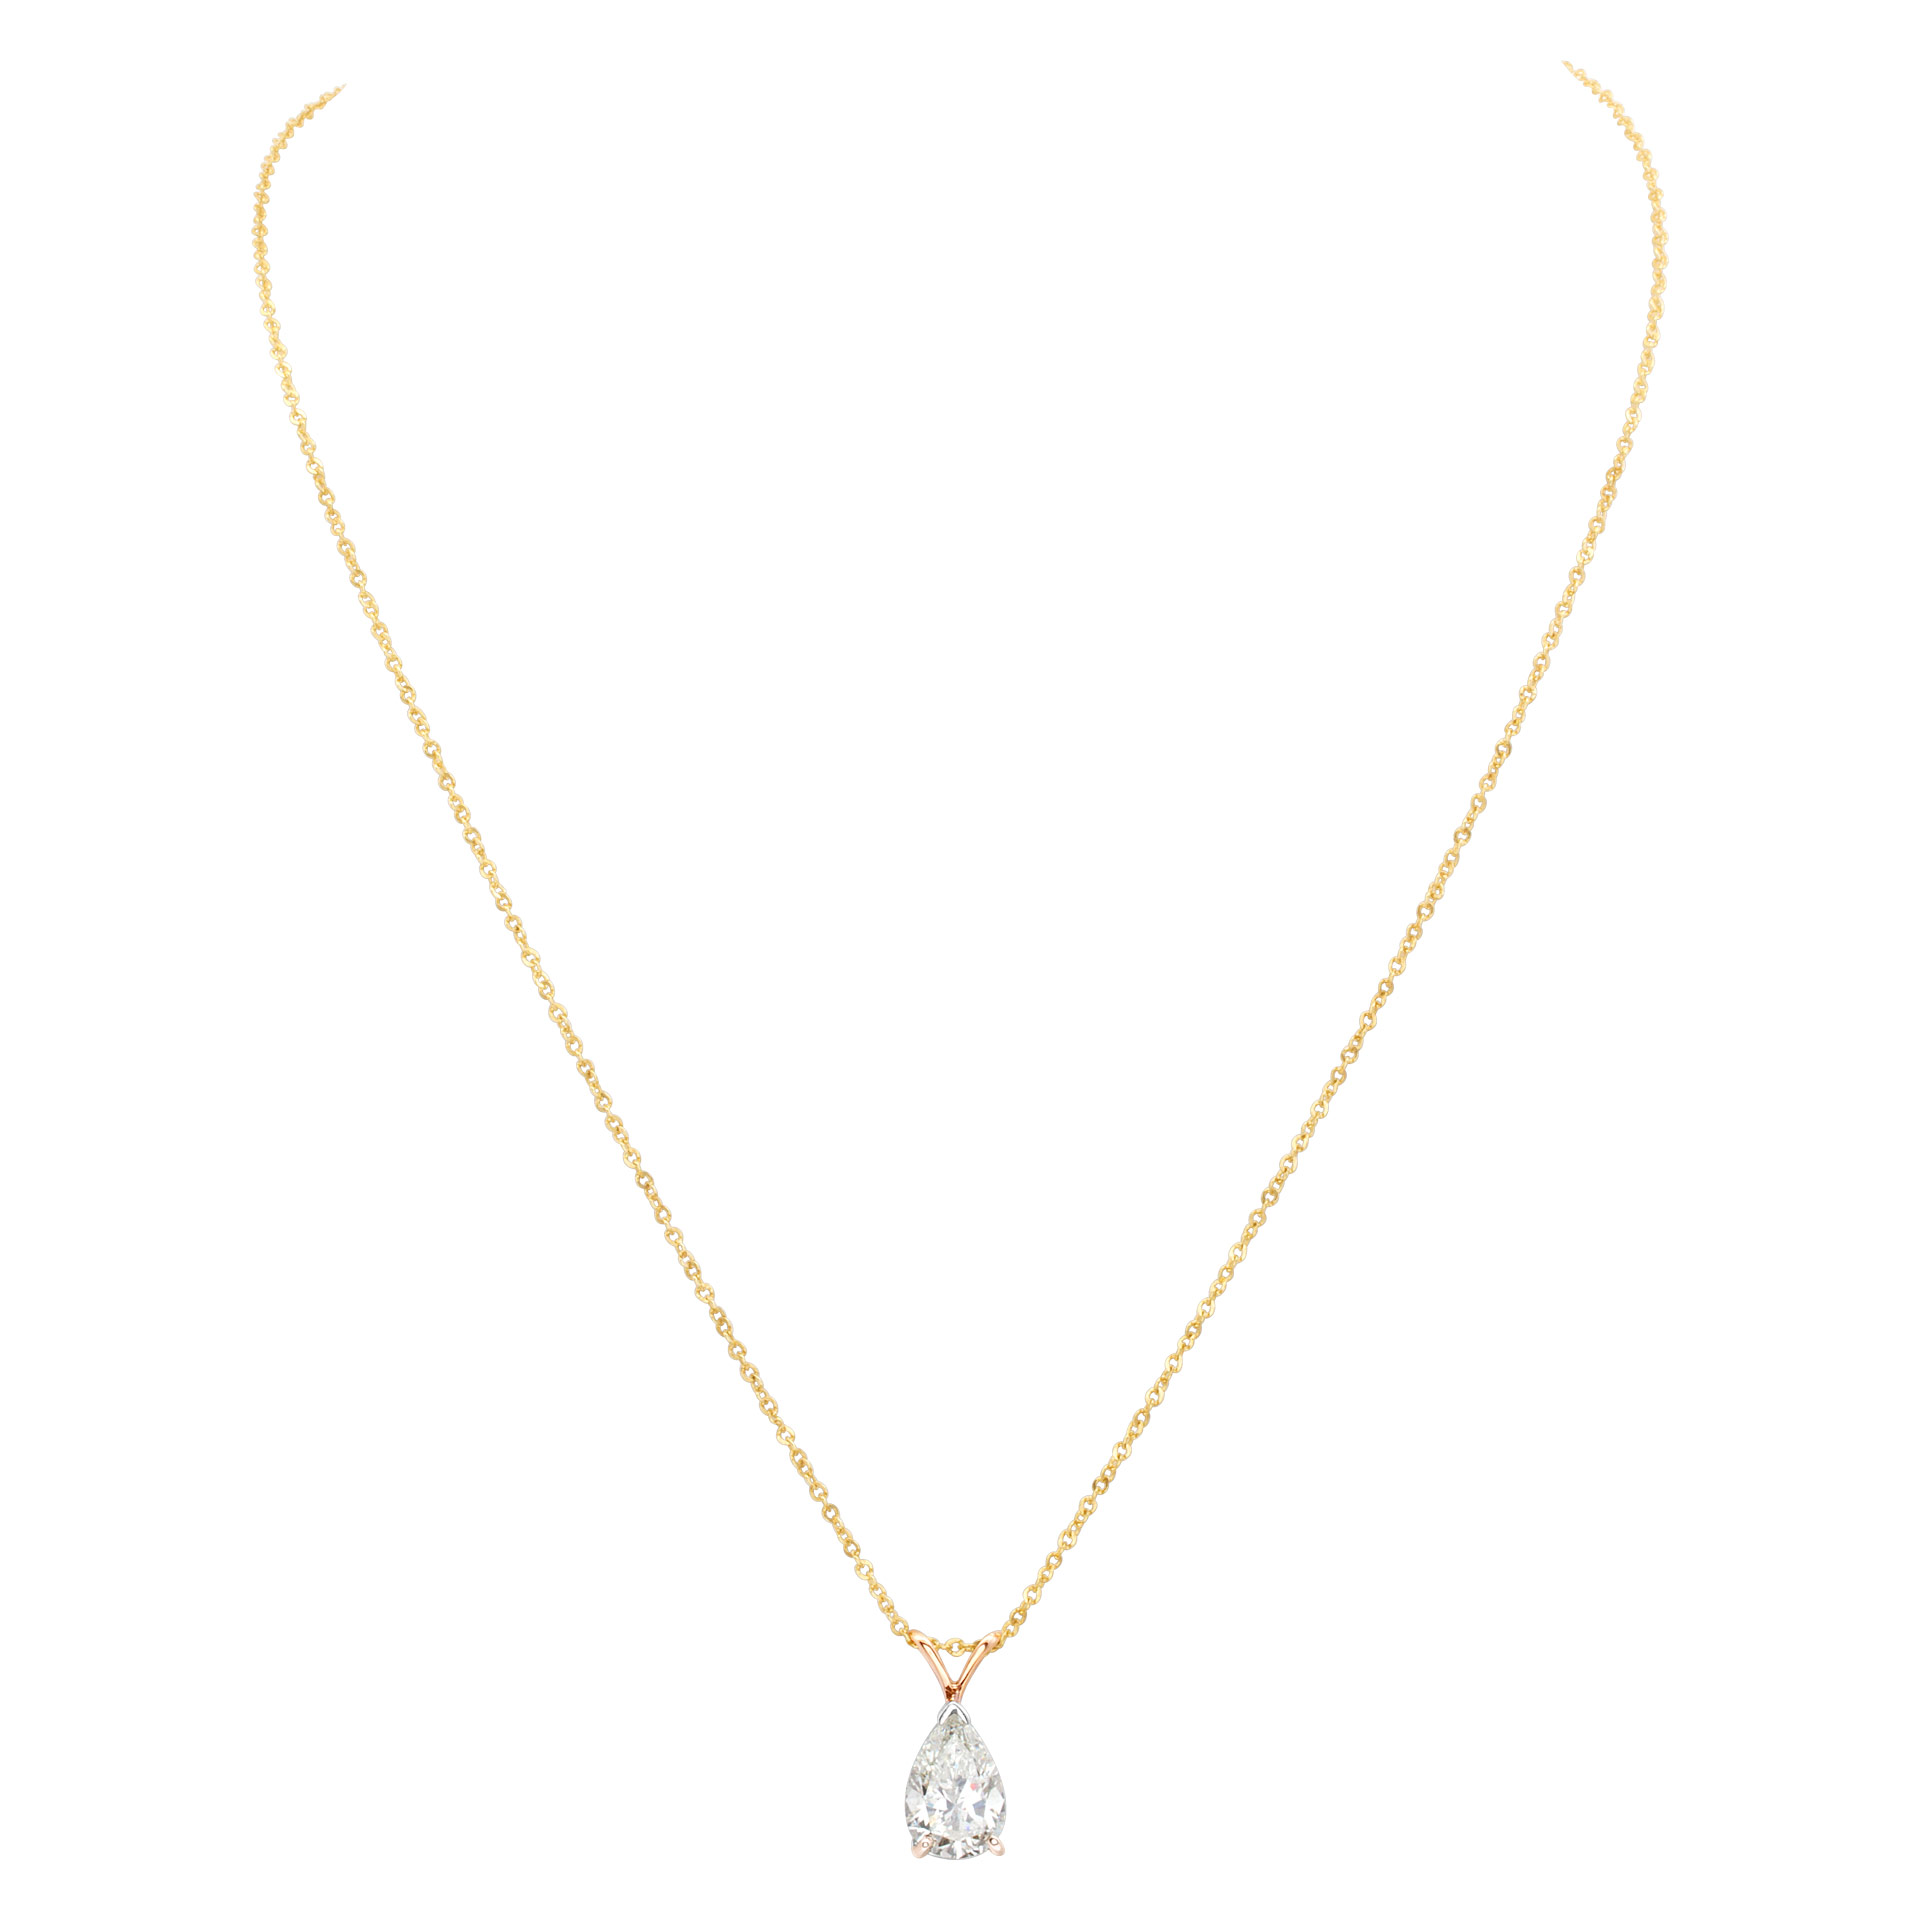 GIA certified pear brilliant shape diamond 2.17 carat (J color, I1 clarity) necklace